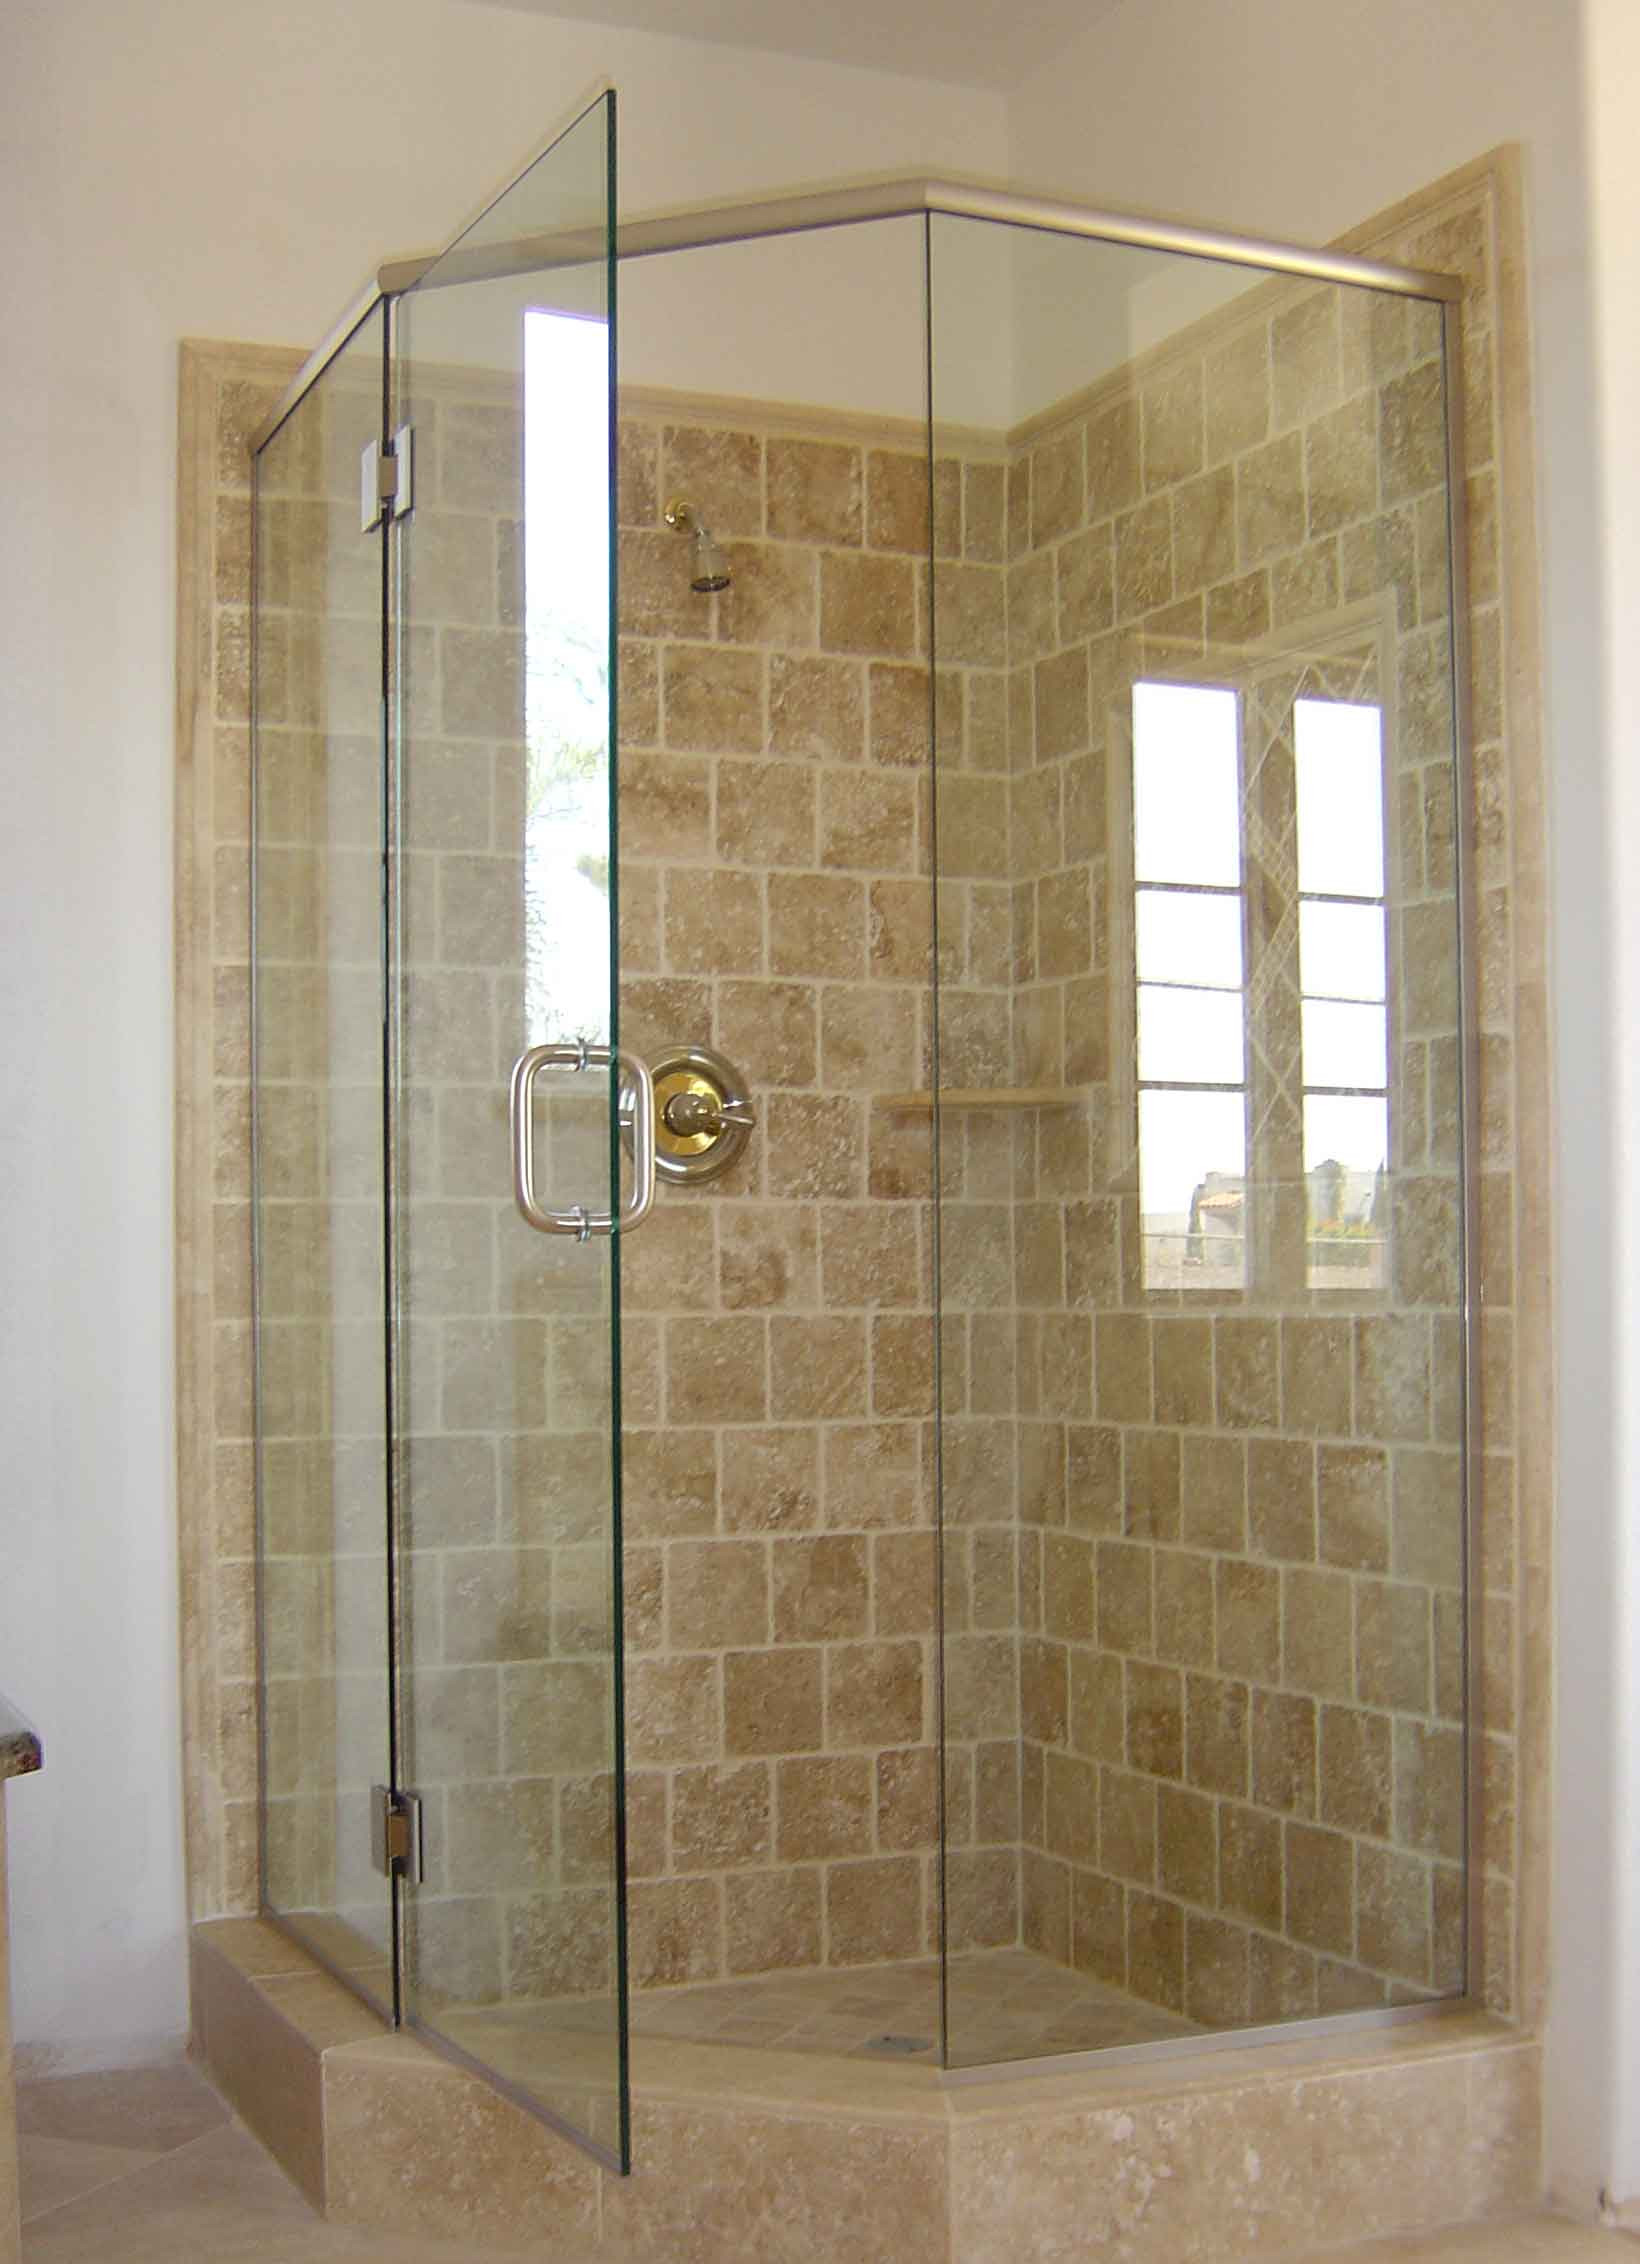 Bathroom Shower Stall Ideas
 SHOWER DOOR GLASS BEST CHOICE